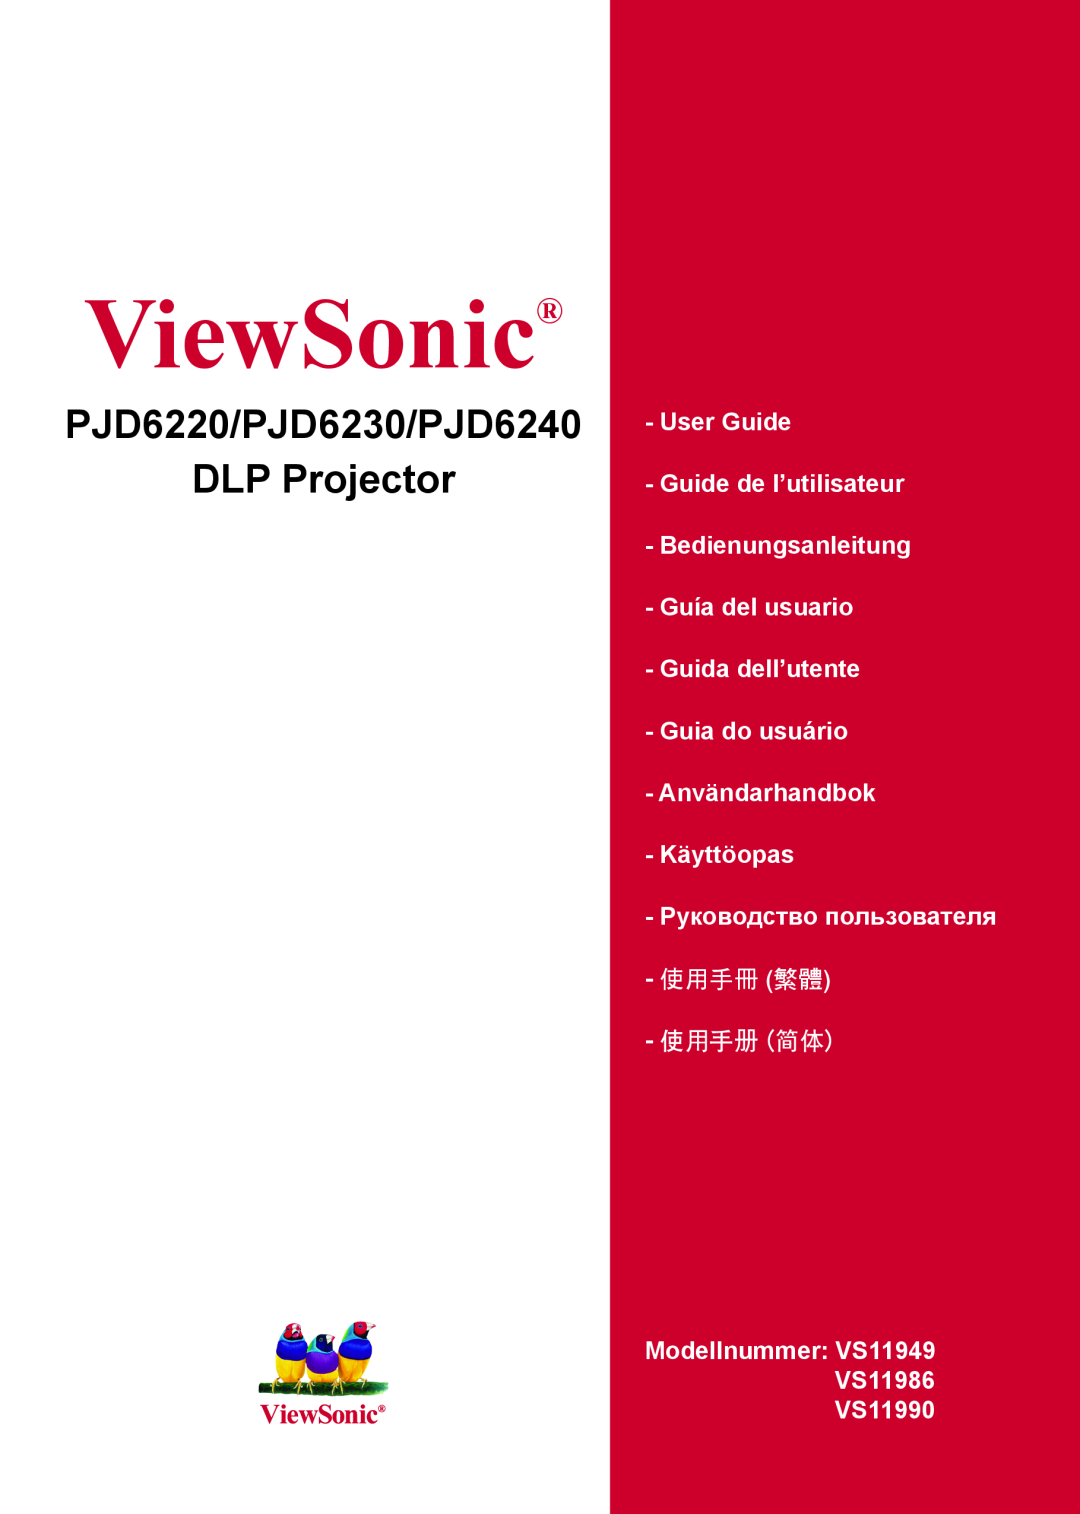 ViewSonic VS11986, VS11990 manual ViewSonic, PJD6220/PJD6230/PJD6240 DLP Projector, Käyttöopas Руководство пользователя 